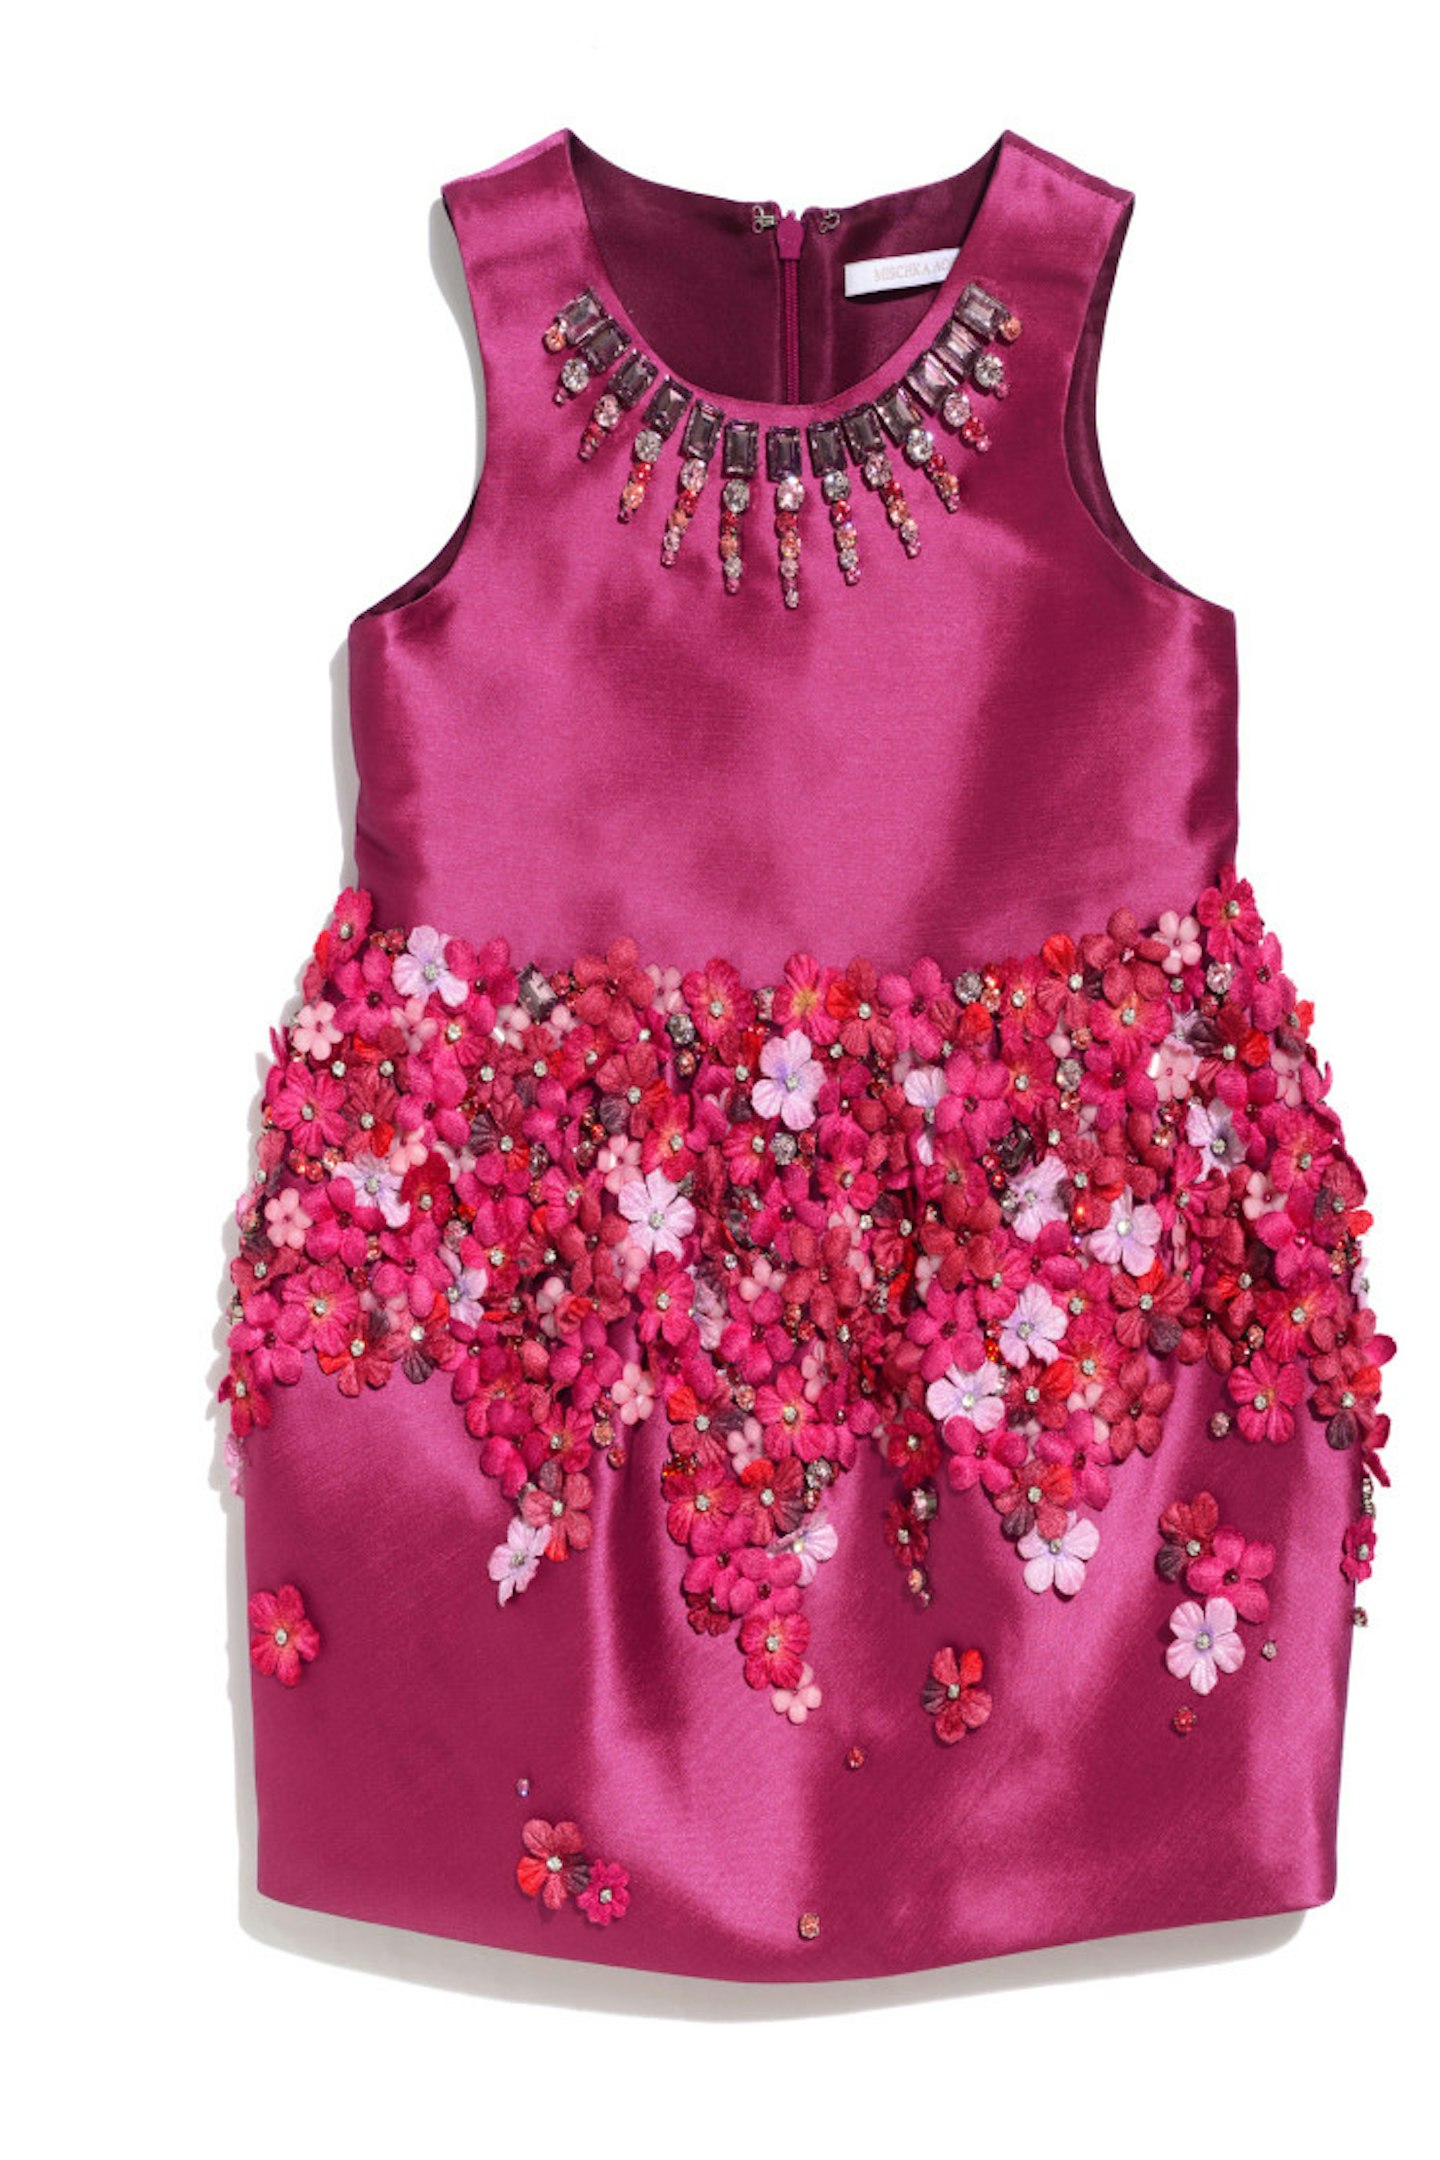 Mischka Aoki ink flower/jewel embellished dress